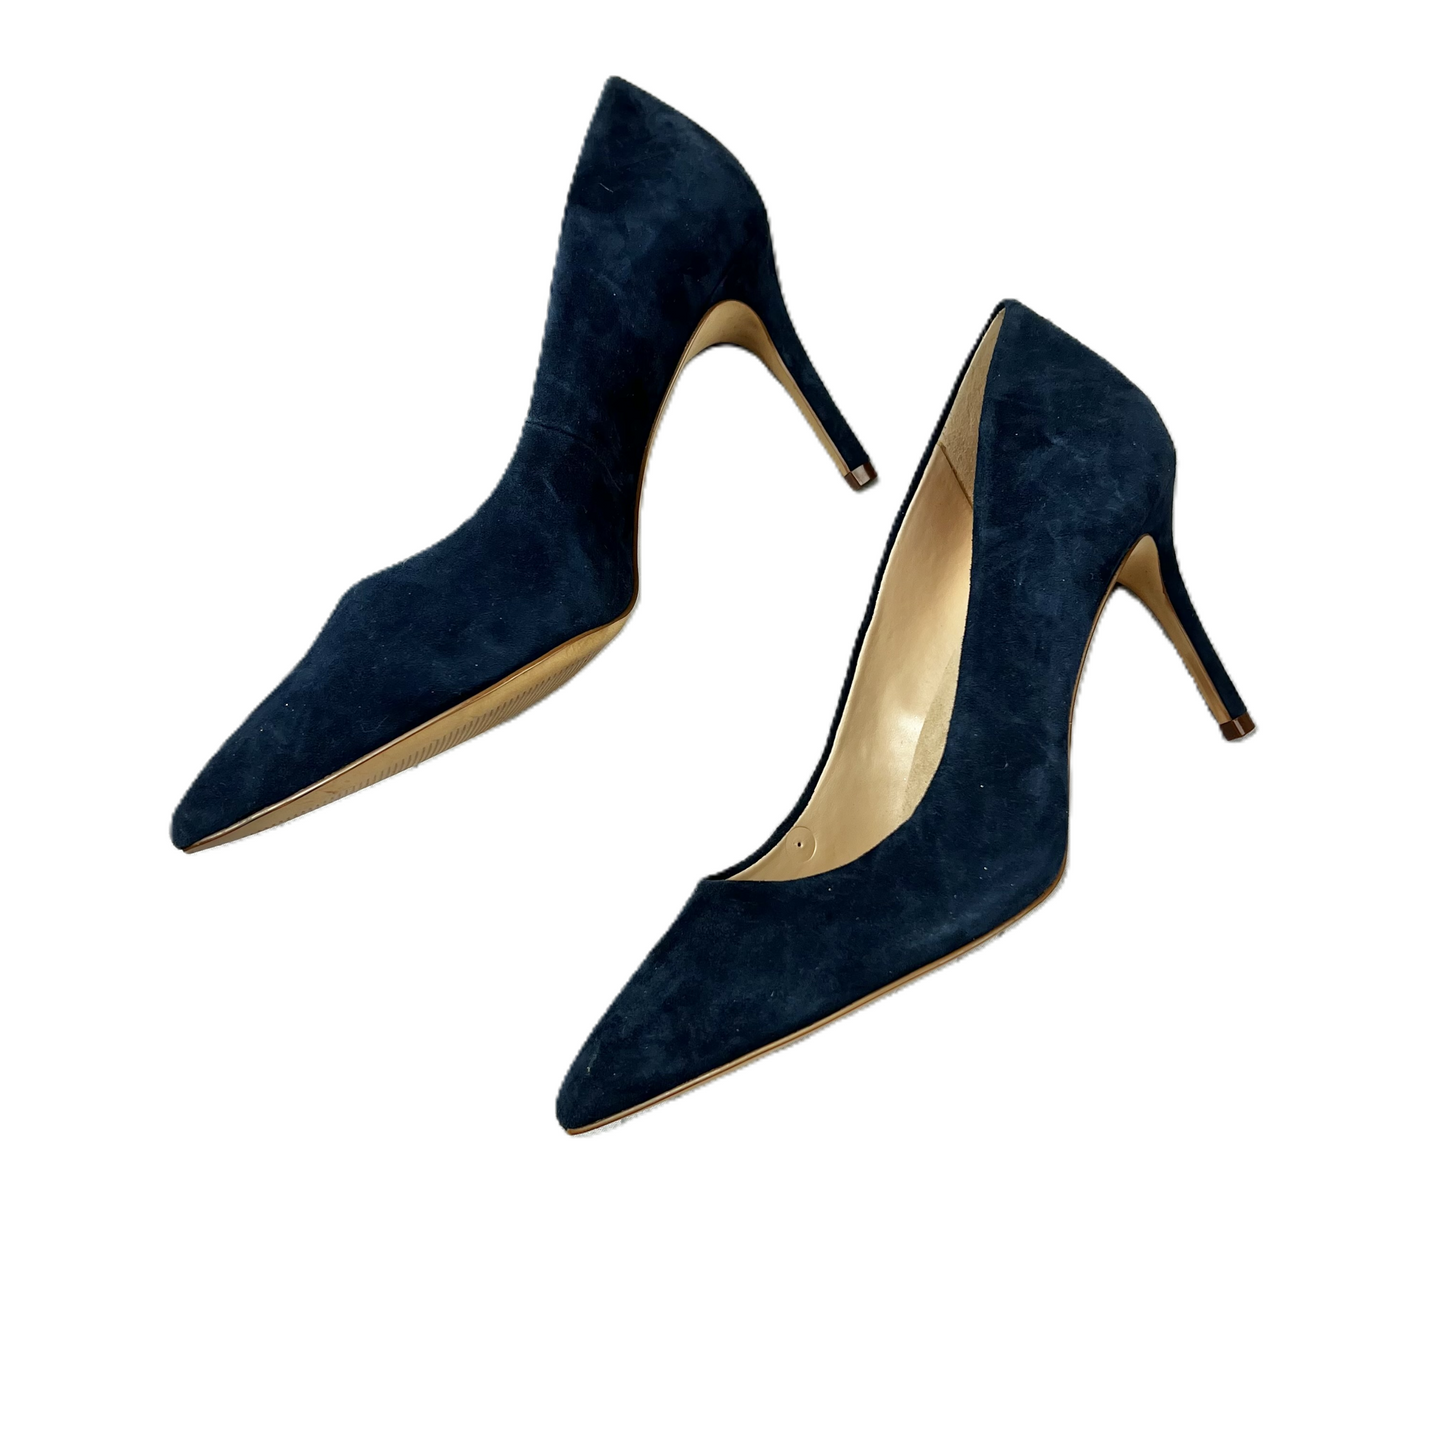 Blue Shoes Heels Stiletto By Essex Lane, Size: 10